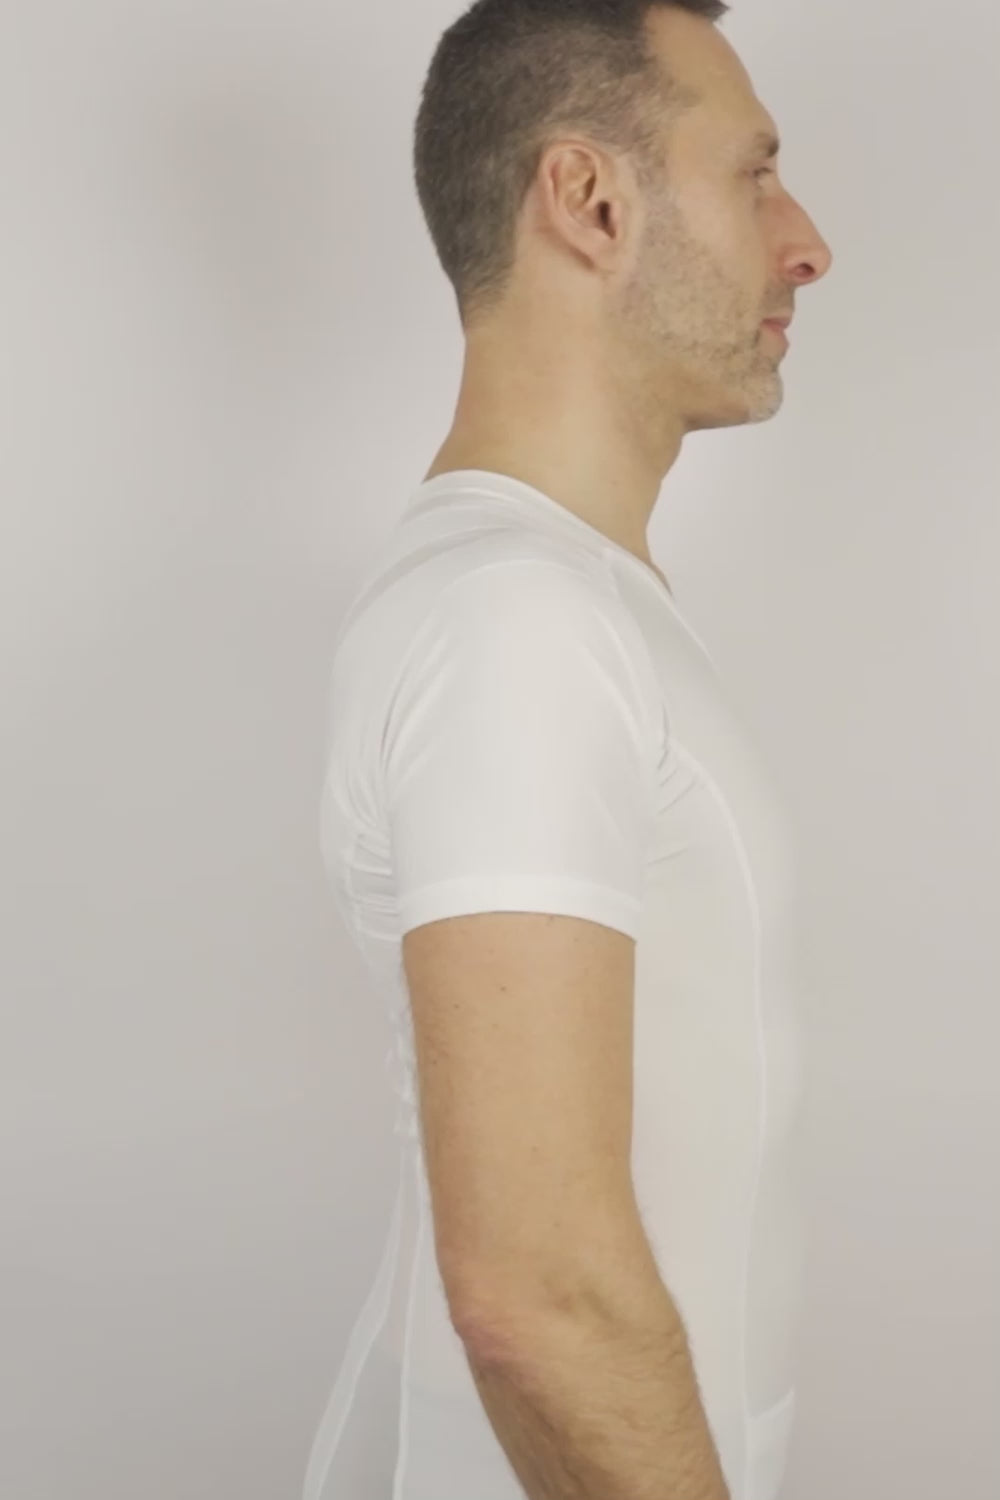 video - mens posture shirt zipper